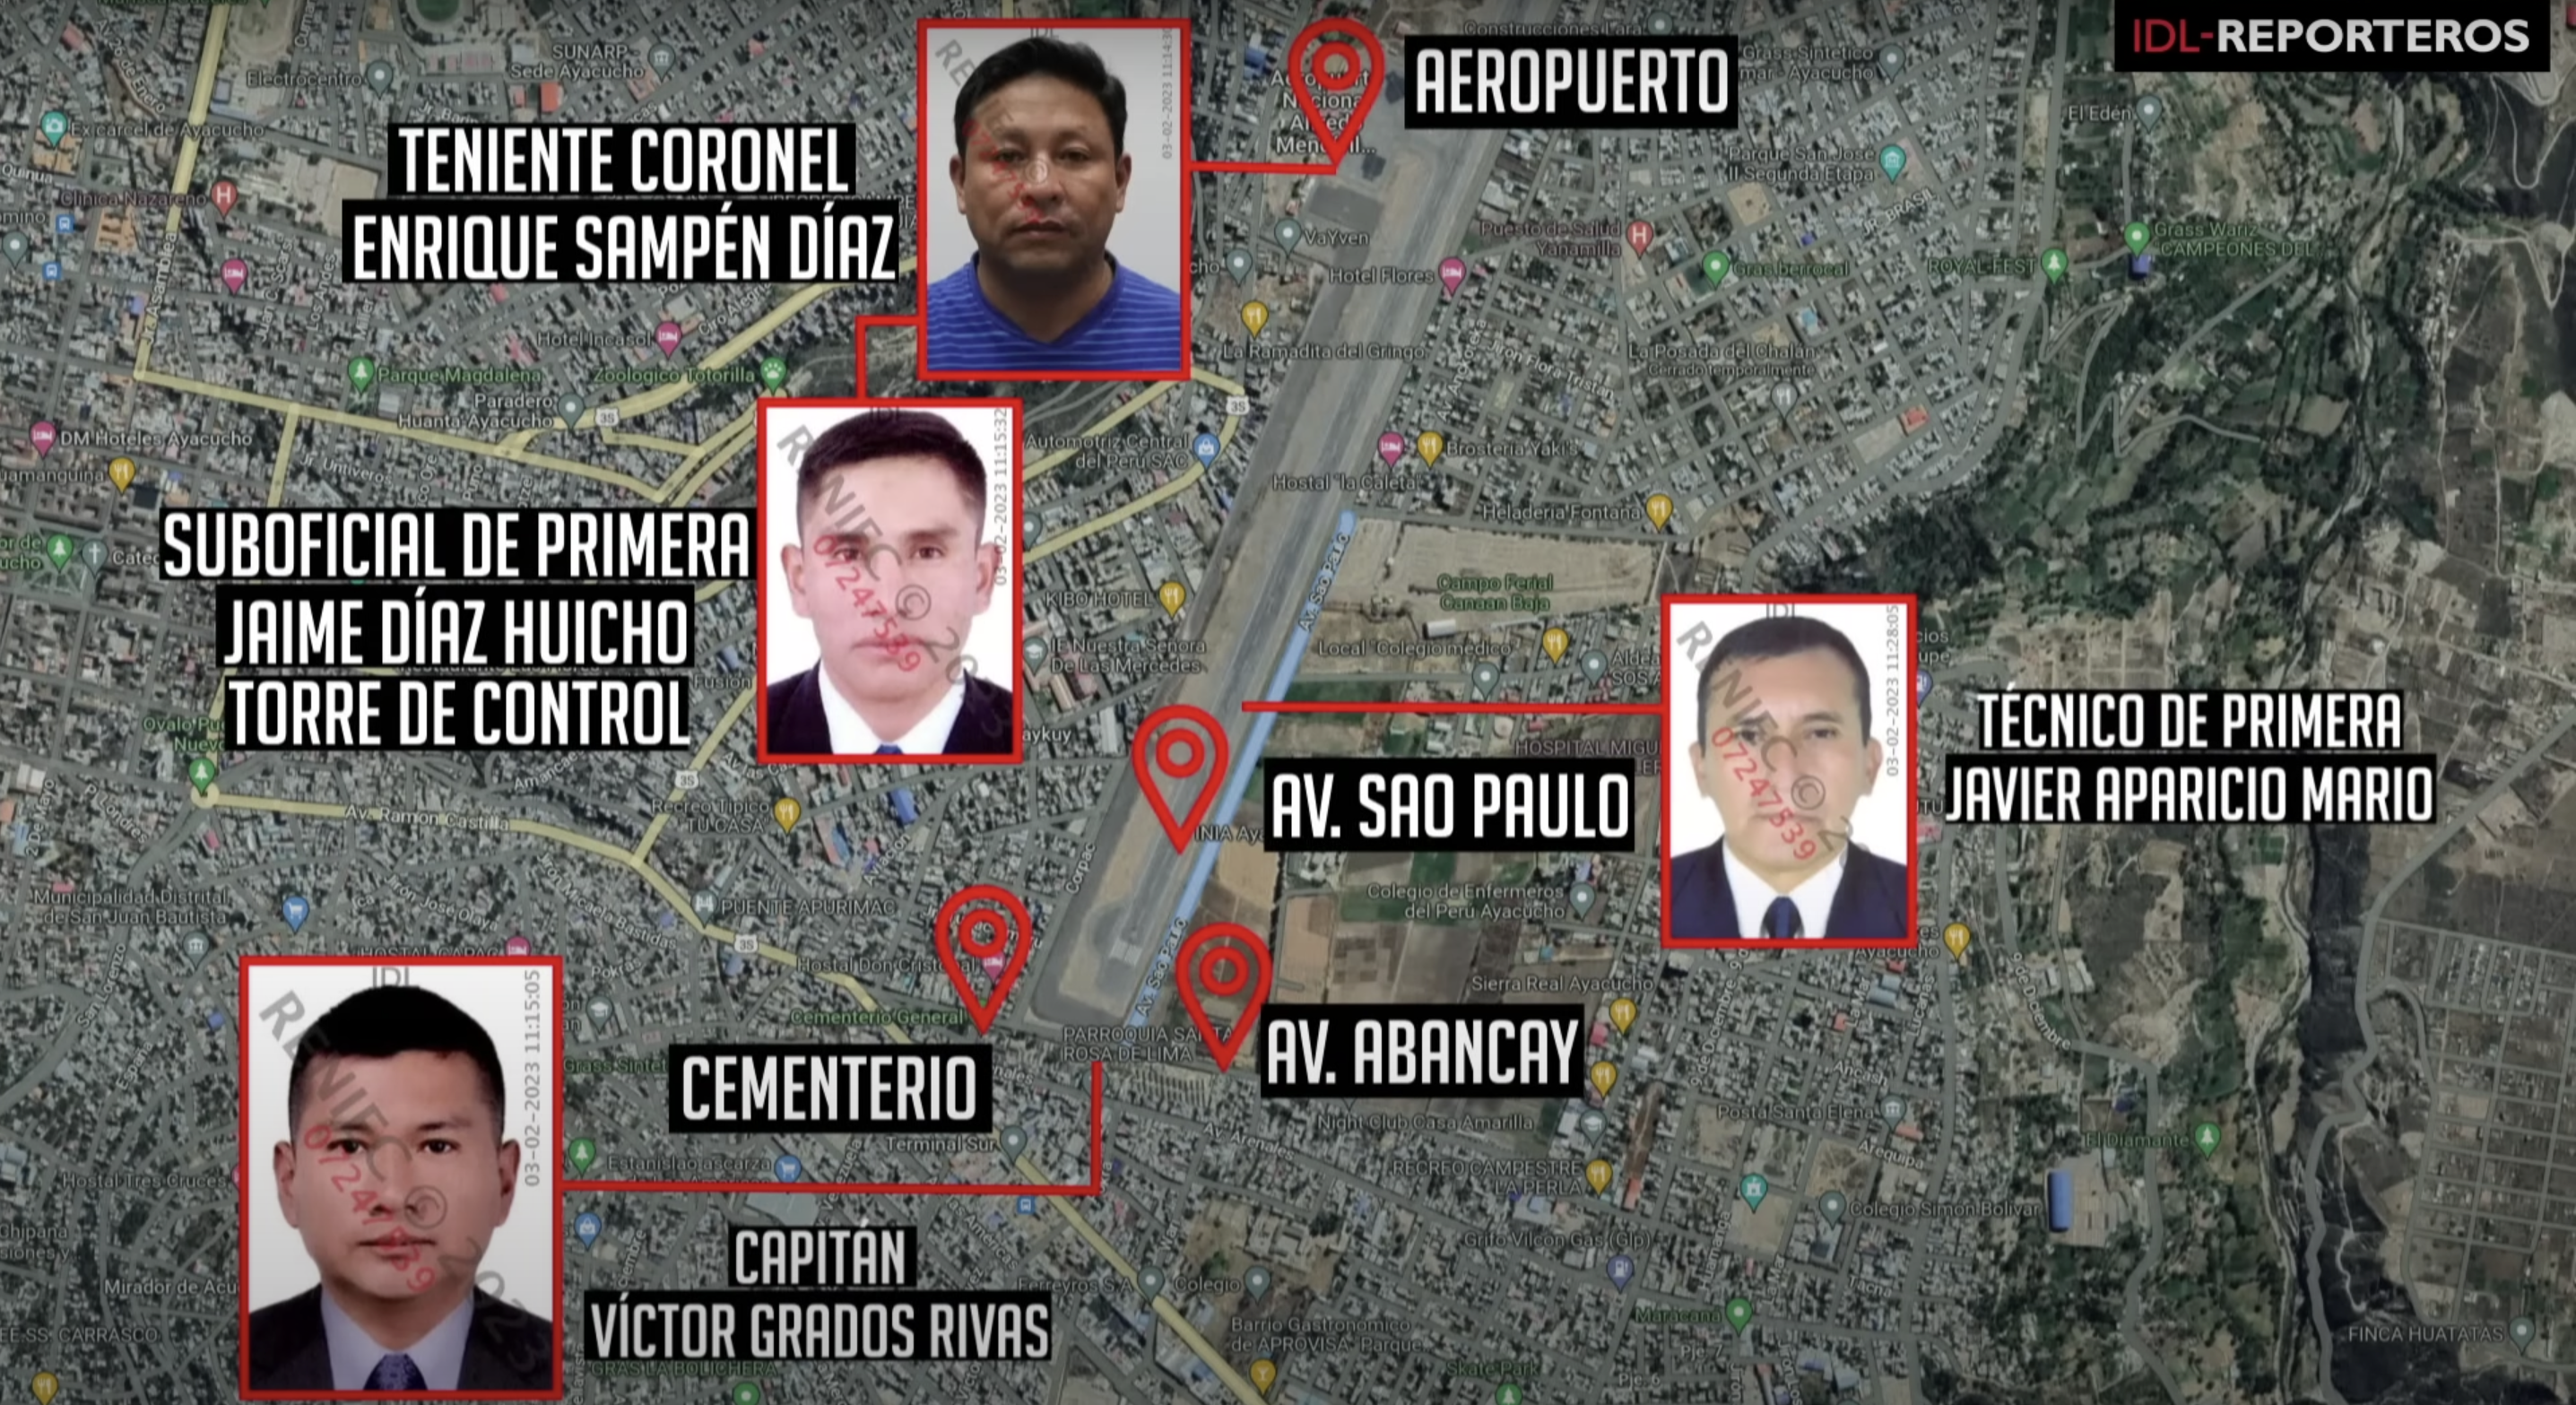 Screenshot of the investigation "Radiografía de Homicidios", by Peruvian media outlet IDL-Reporteros.